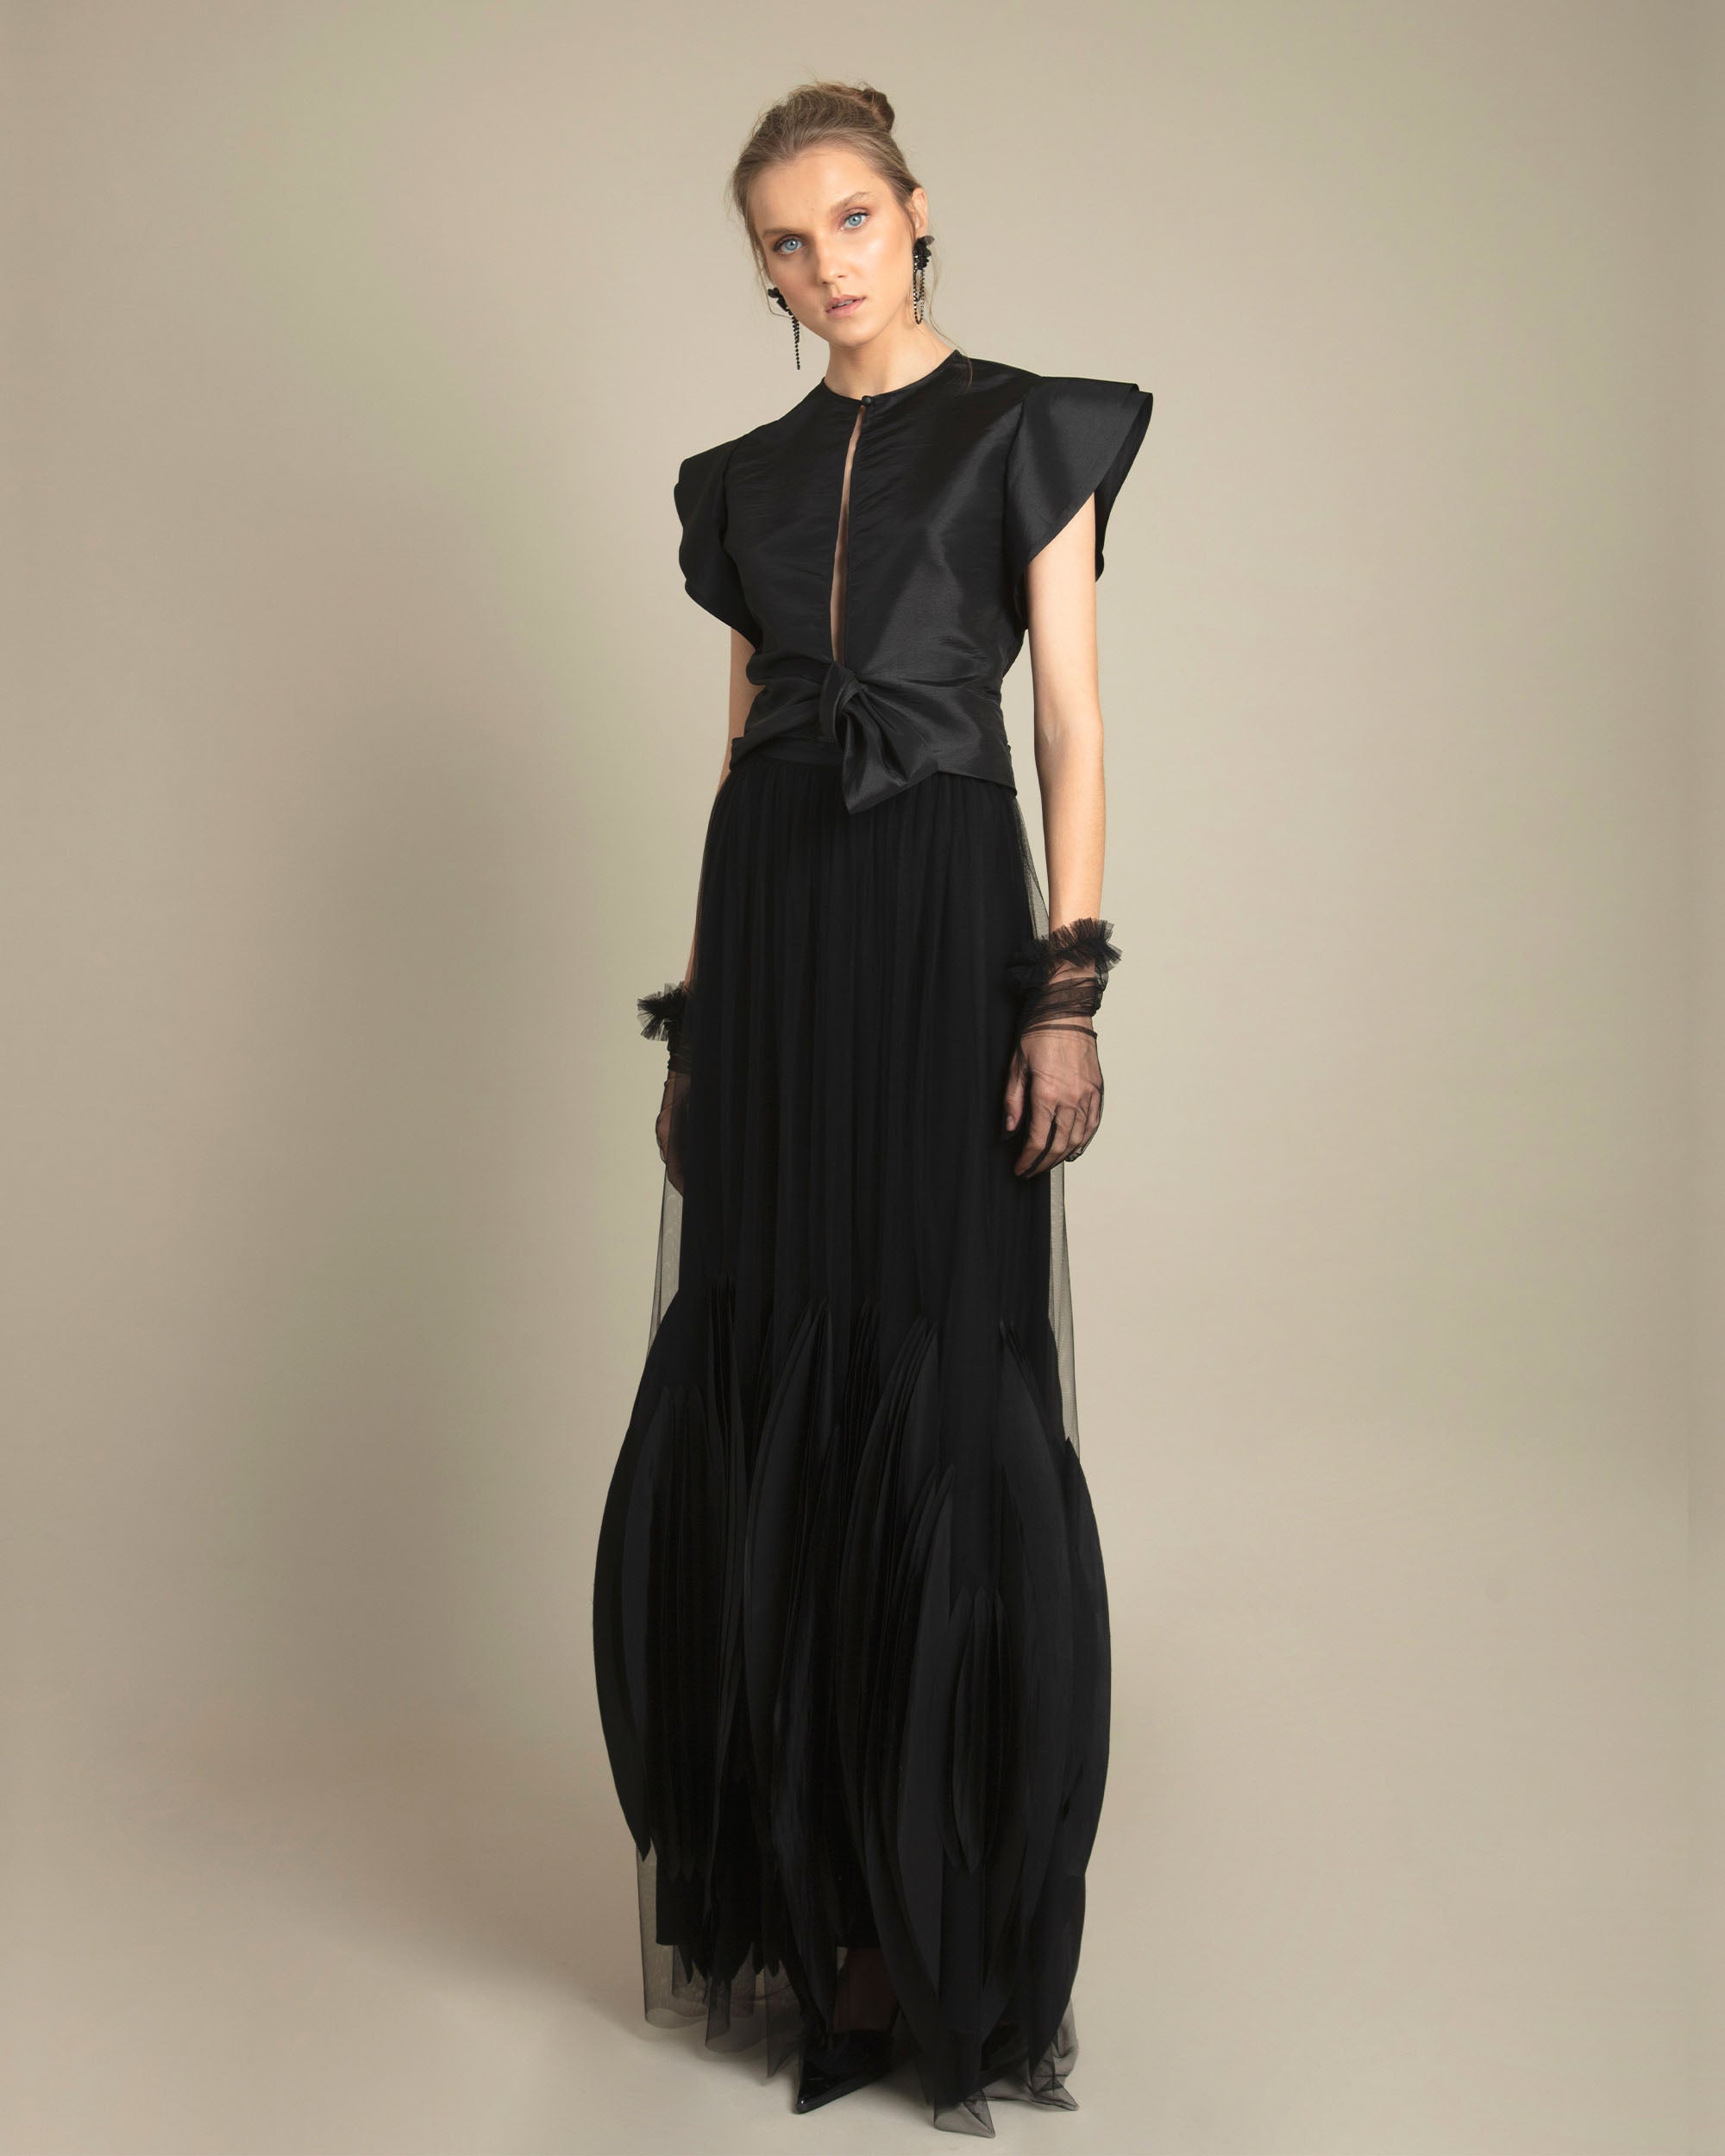 Gemy Maalouf - Buy Evening Dresses Online - Designer Dress